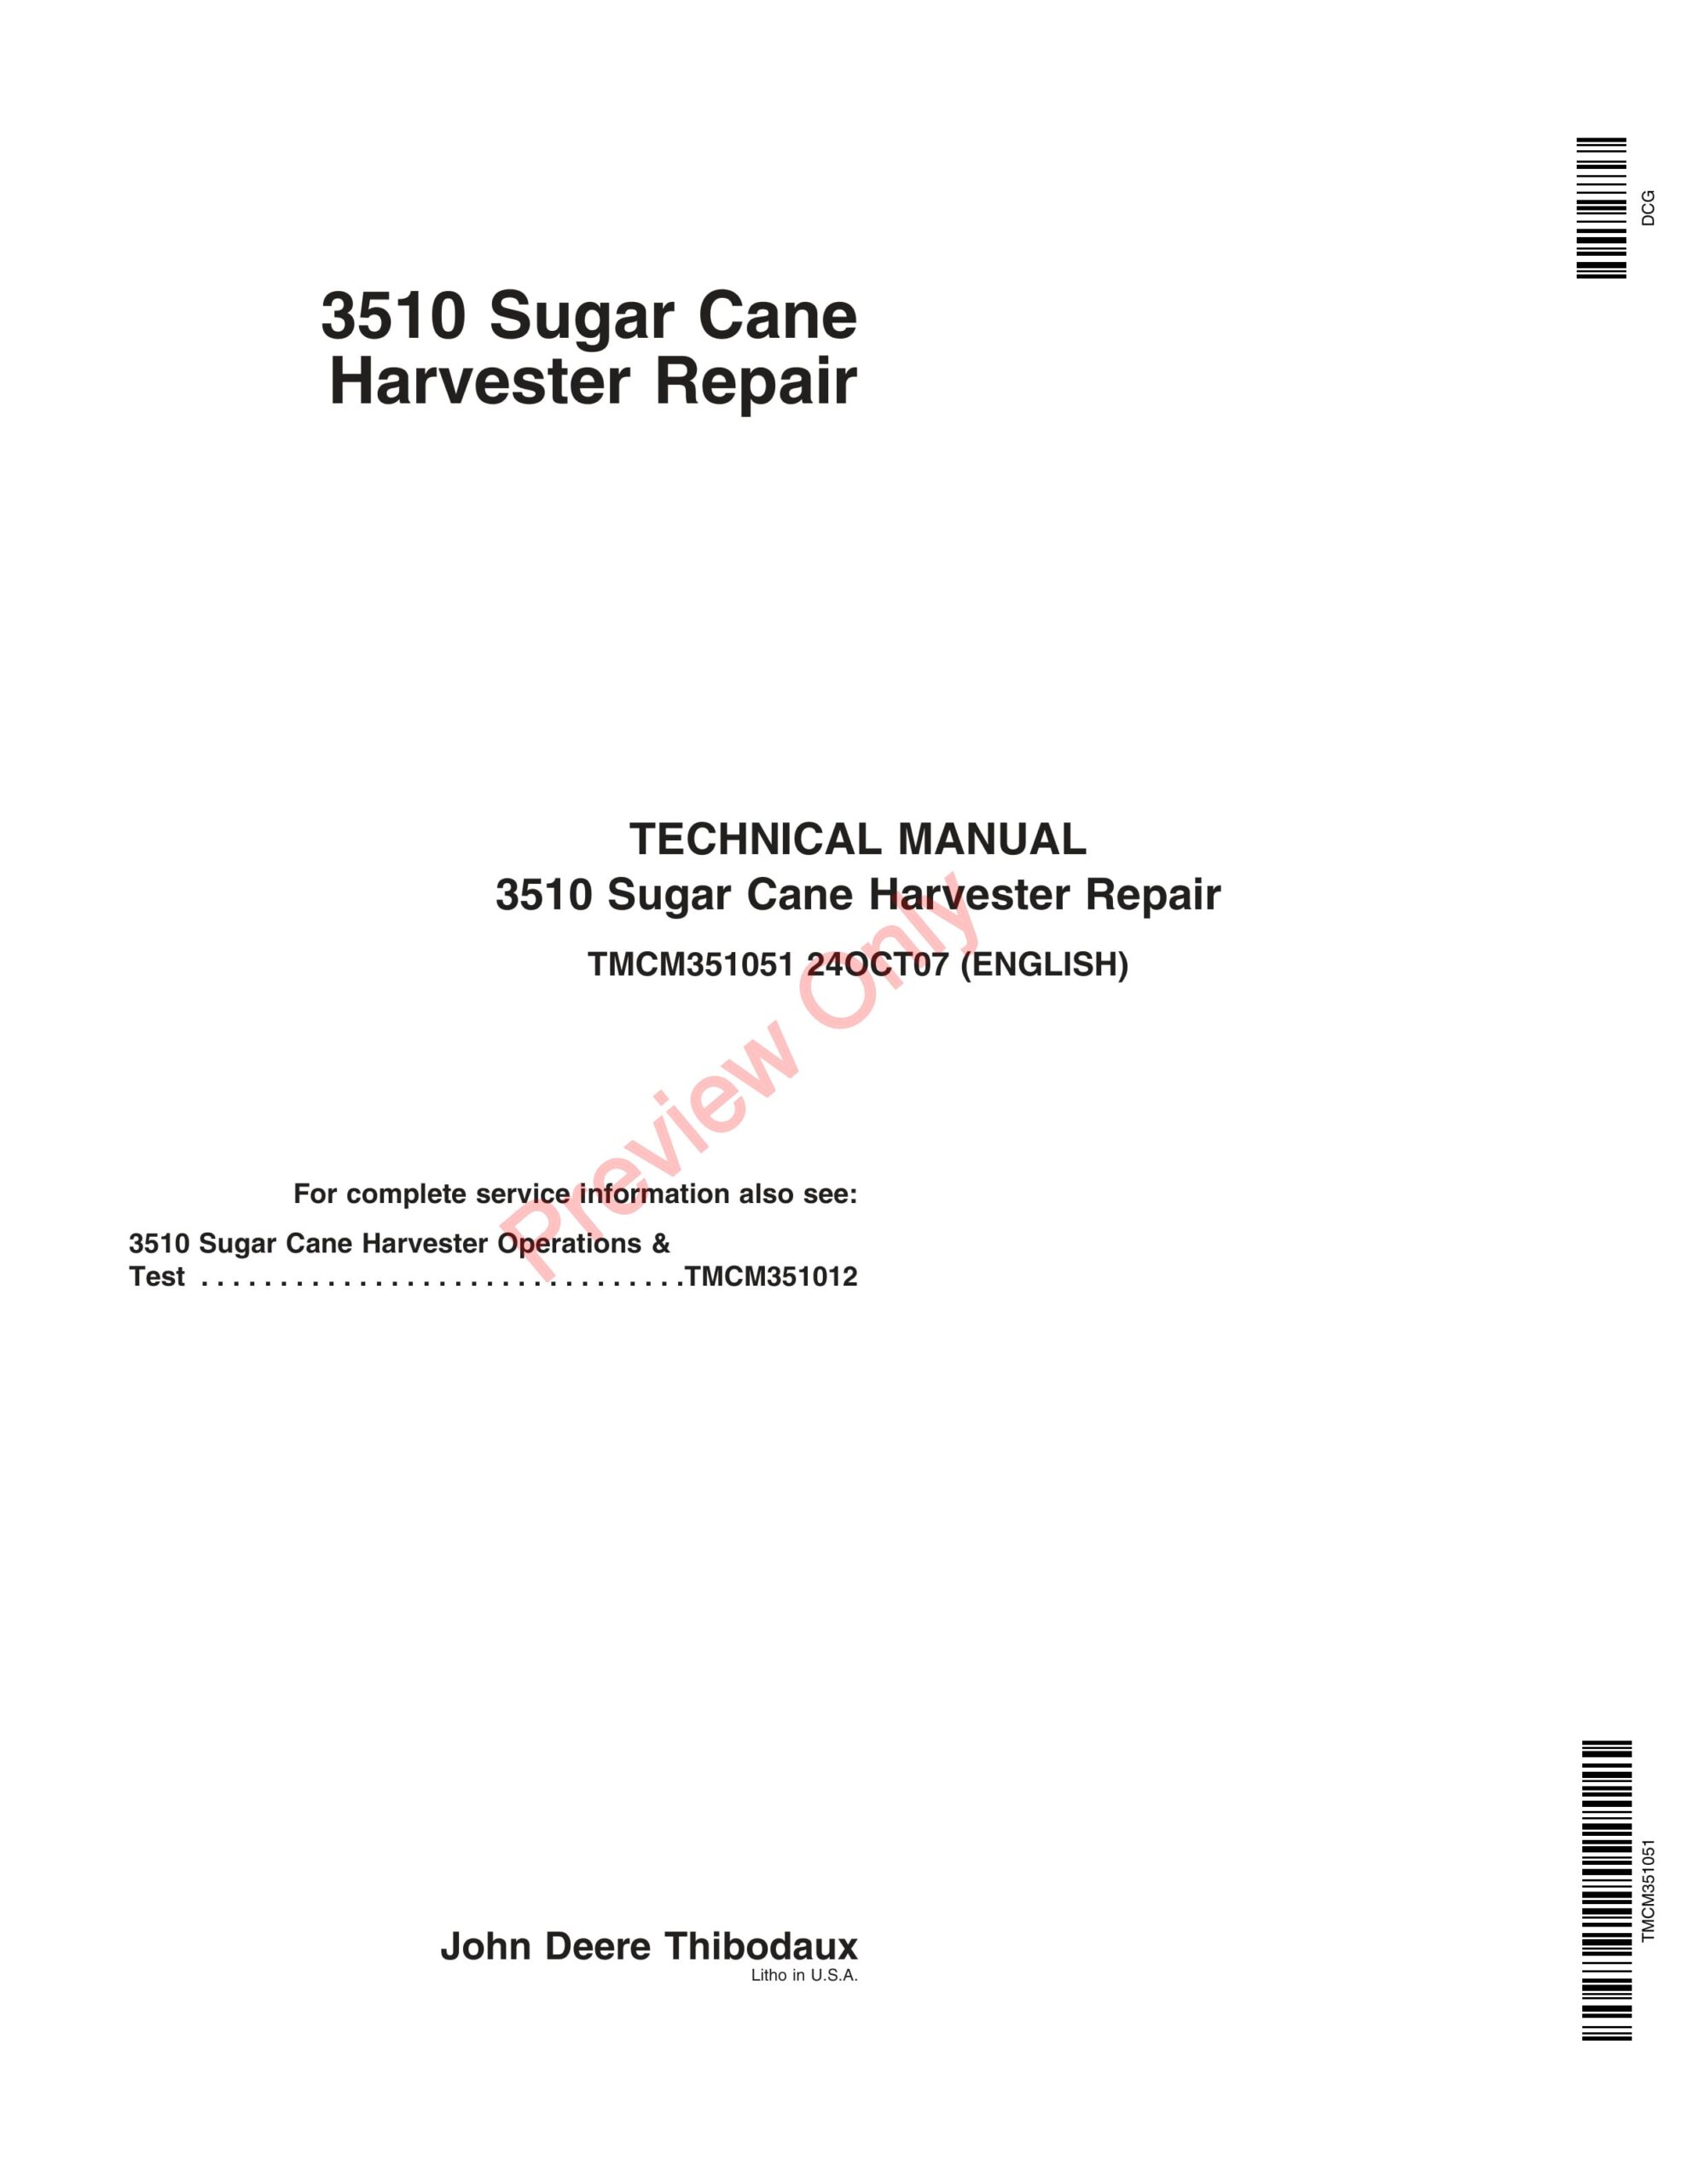 John Deere Harvester 3510 Sugar Cane – (WW) Service Information TMCM351051 J7-1